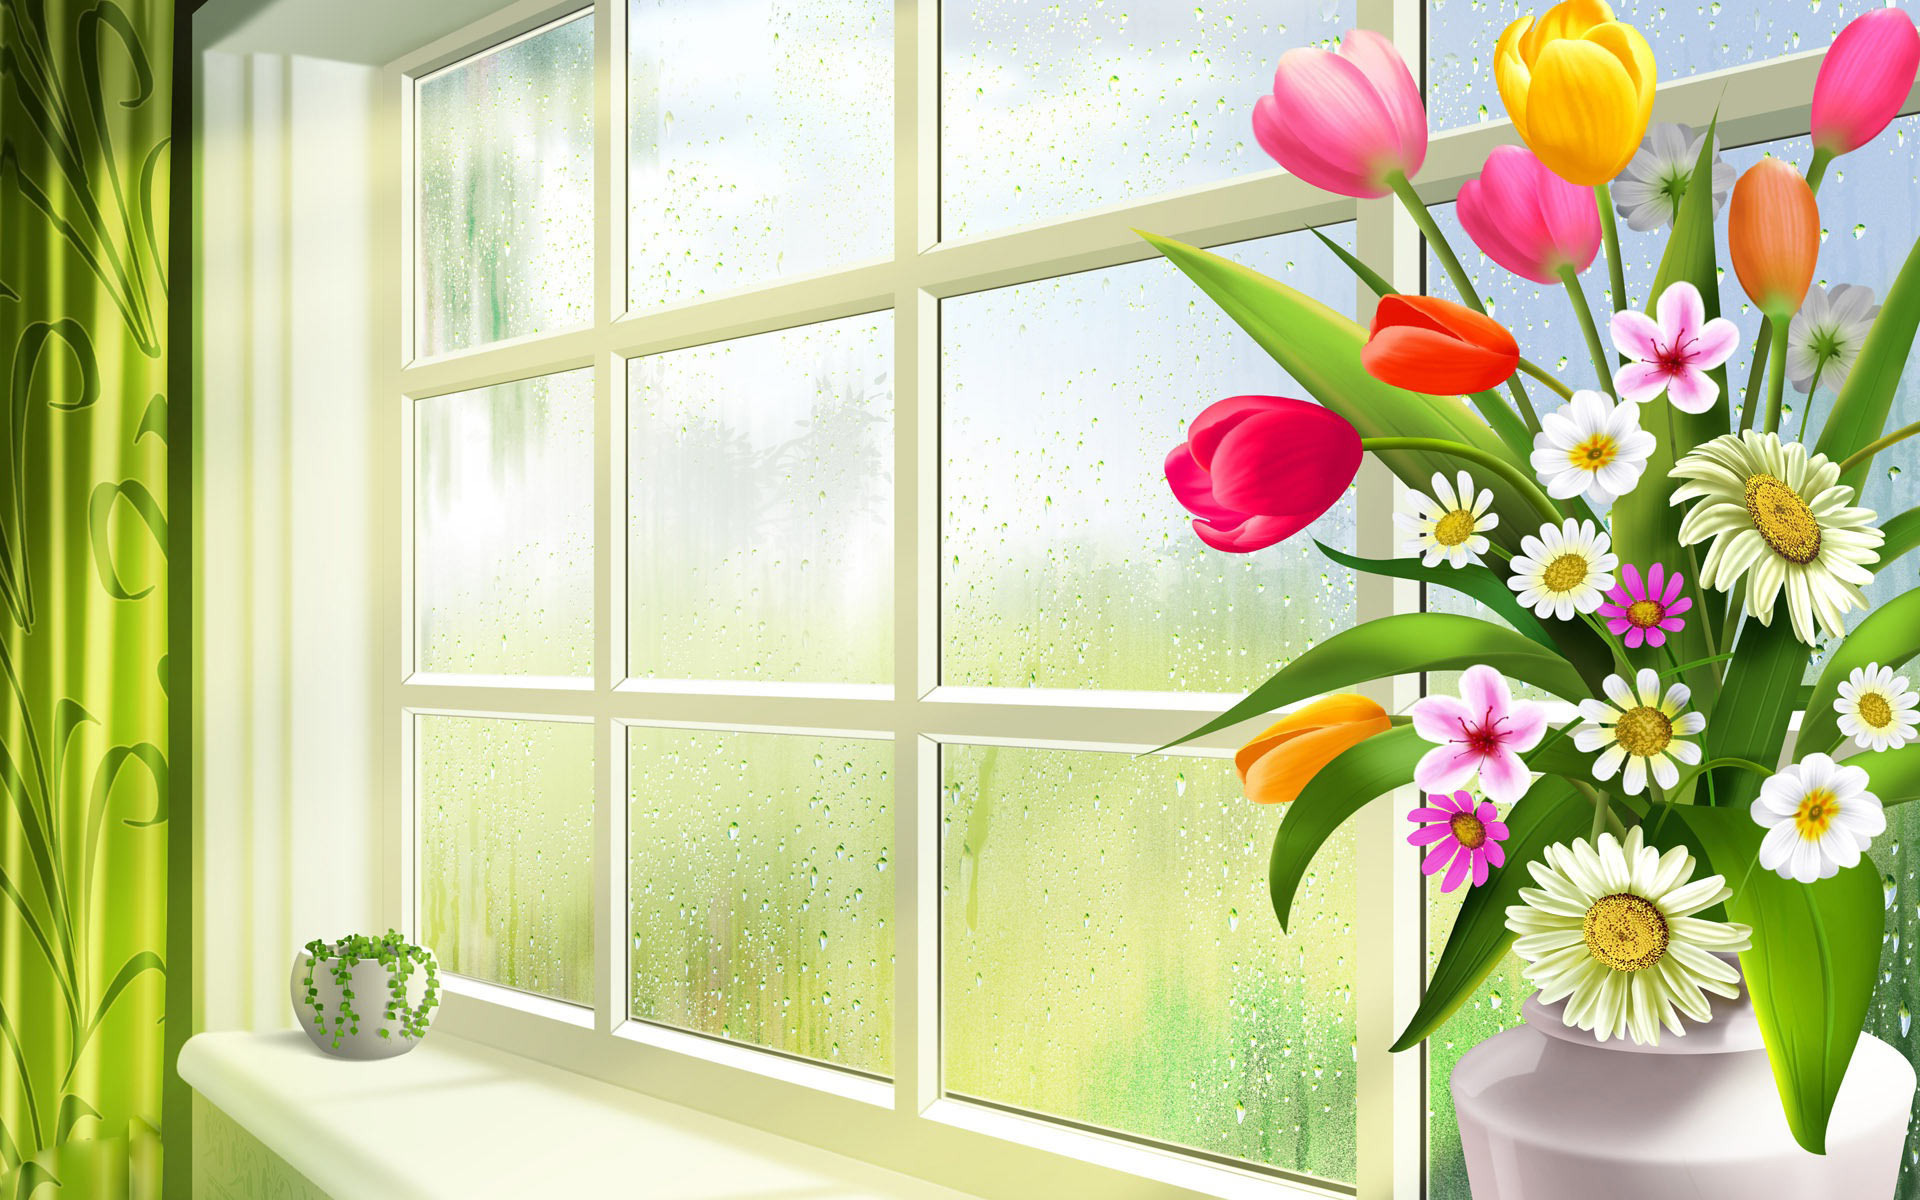 Spring Flowers On A Window Ledge Wallpaper